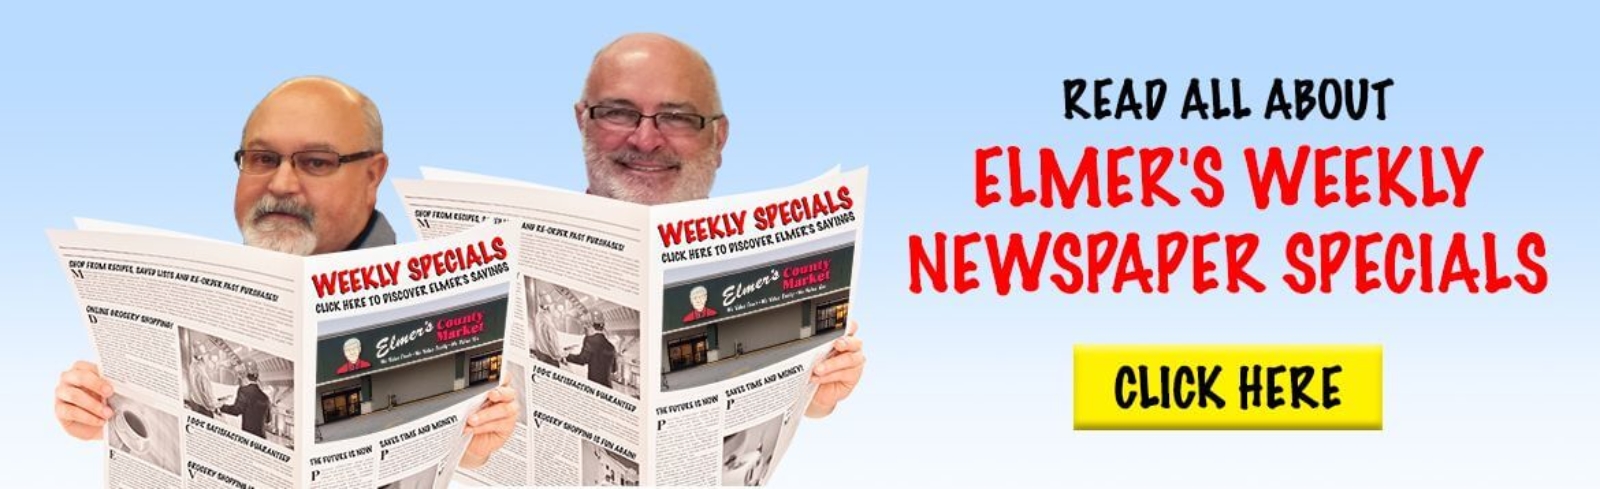 Elmers-Weekly-Specials-glider